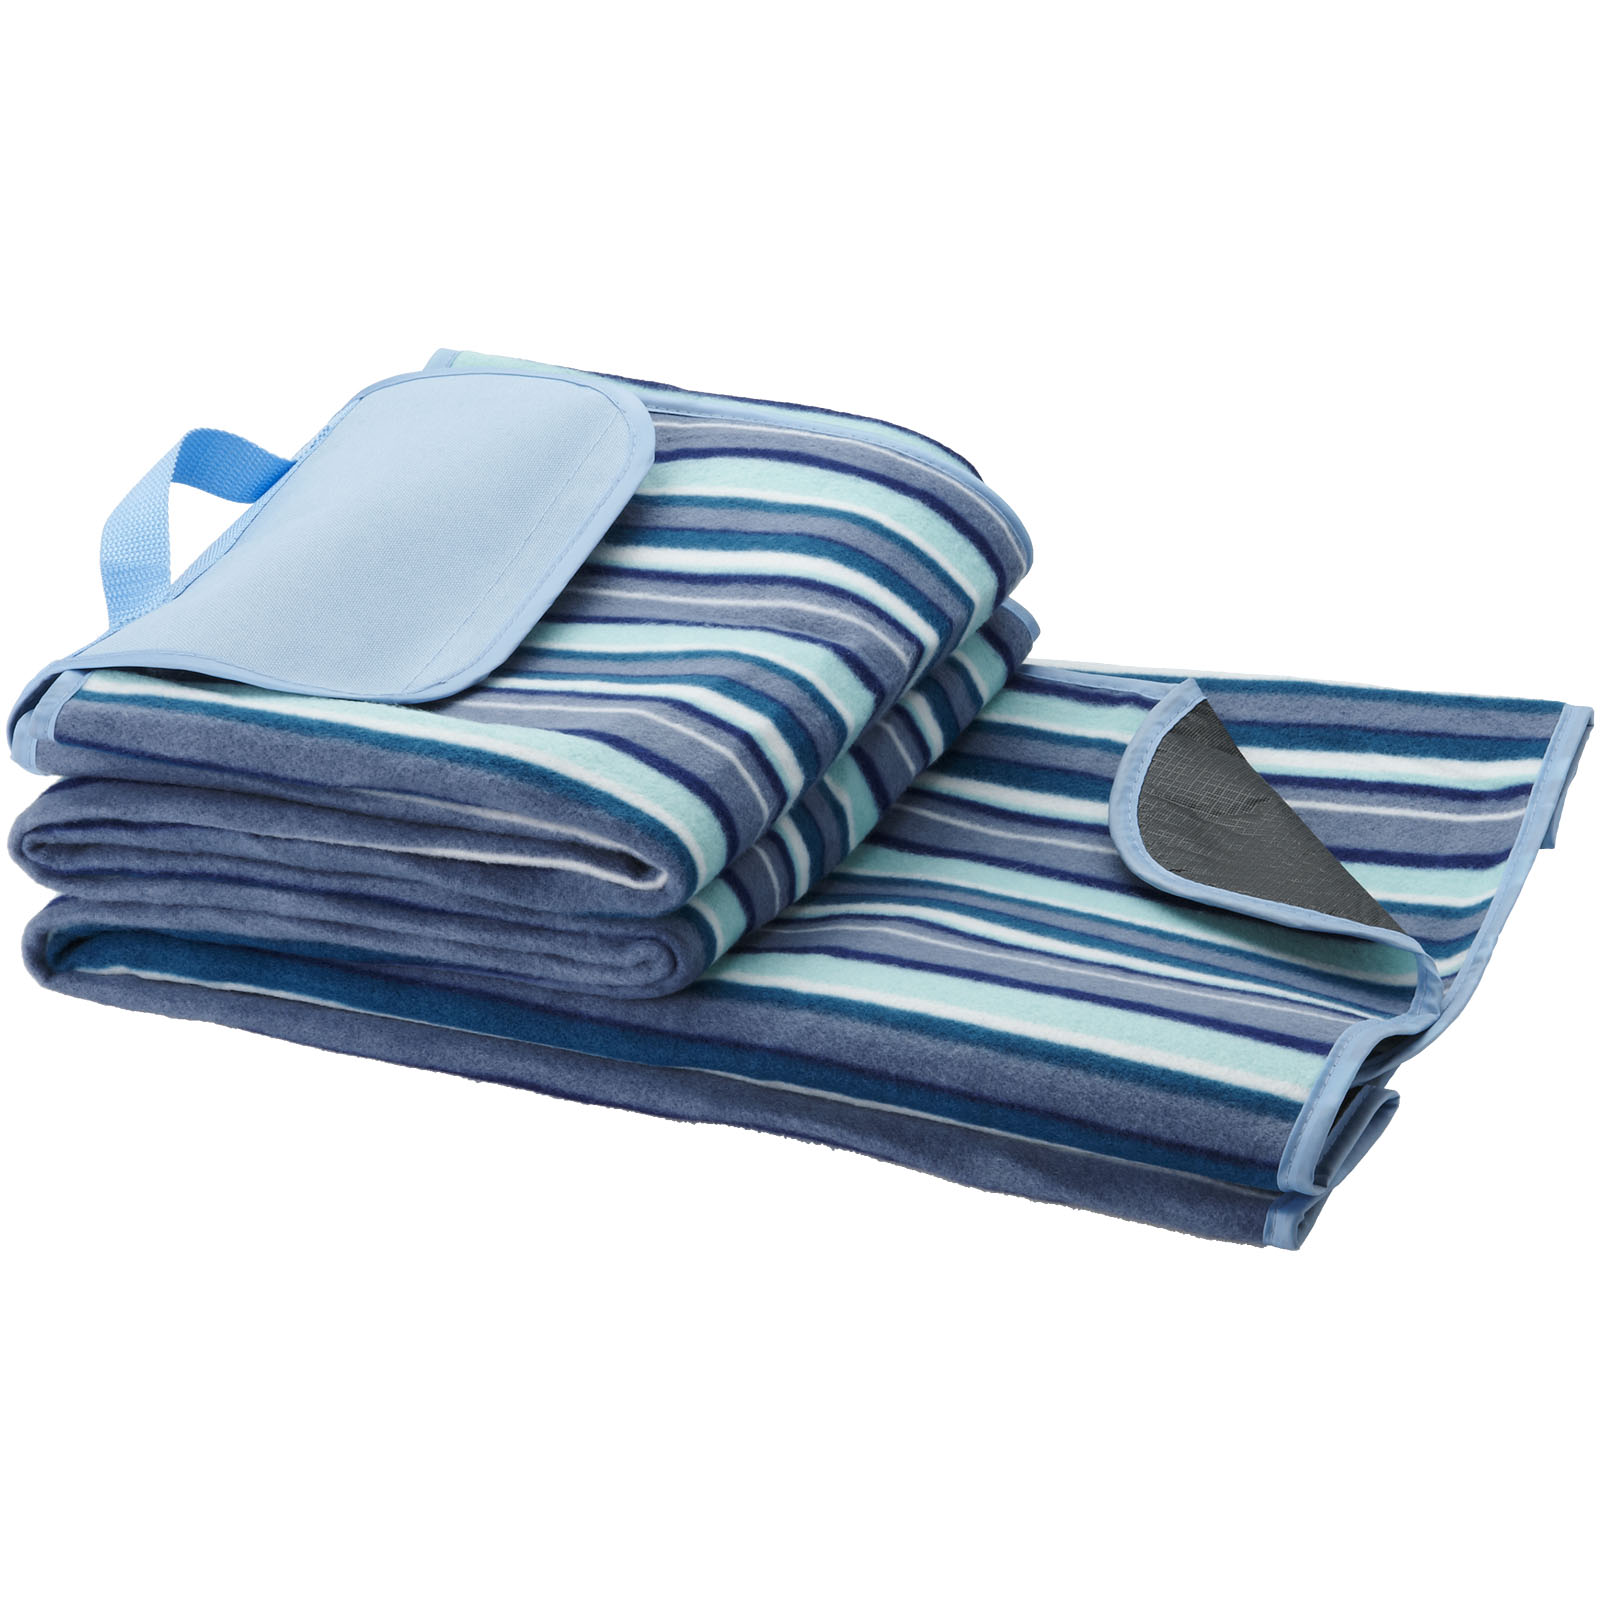 Picnic blanket JUXTA with waterproof lining - white / blue